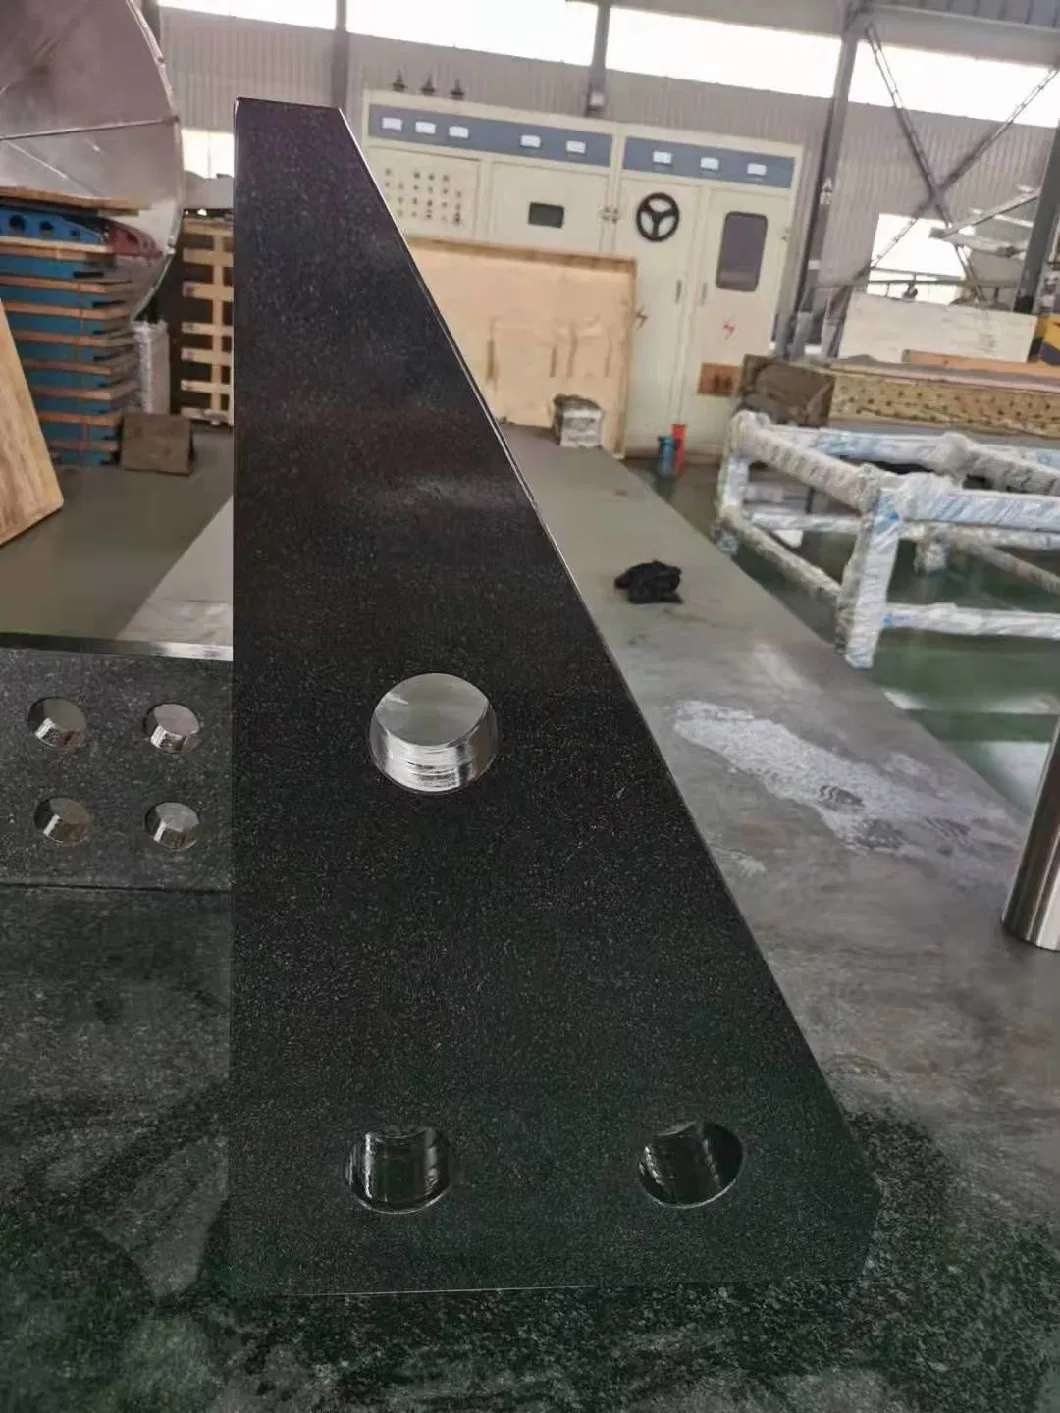 Weld Working Table, Weld Machining Platform